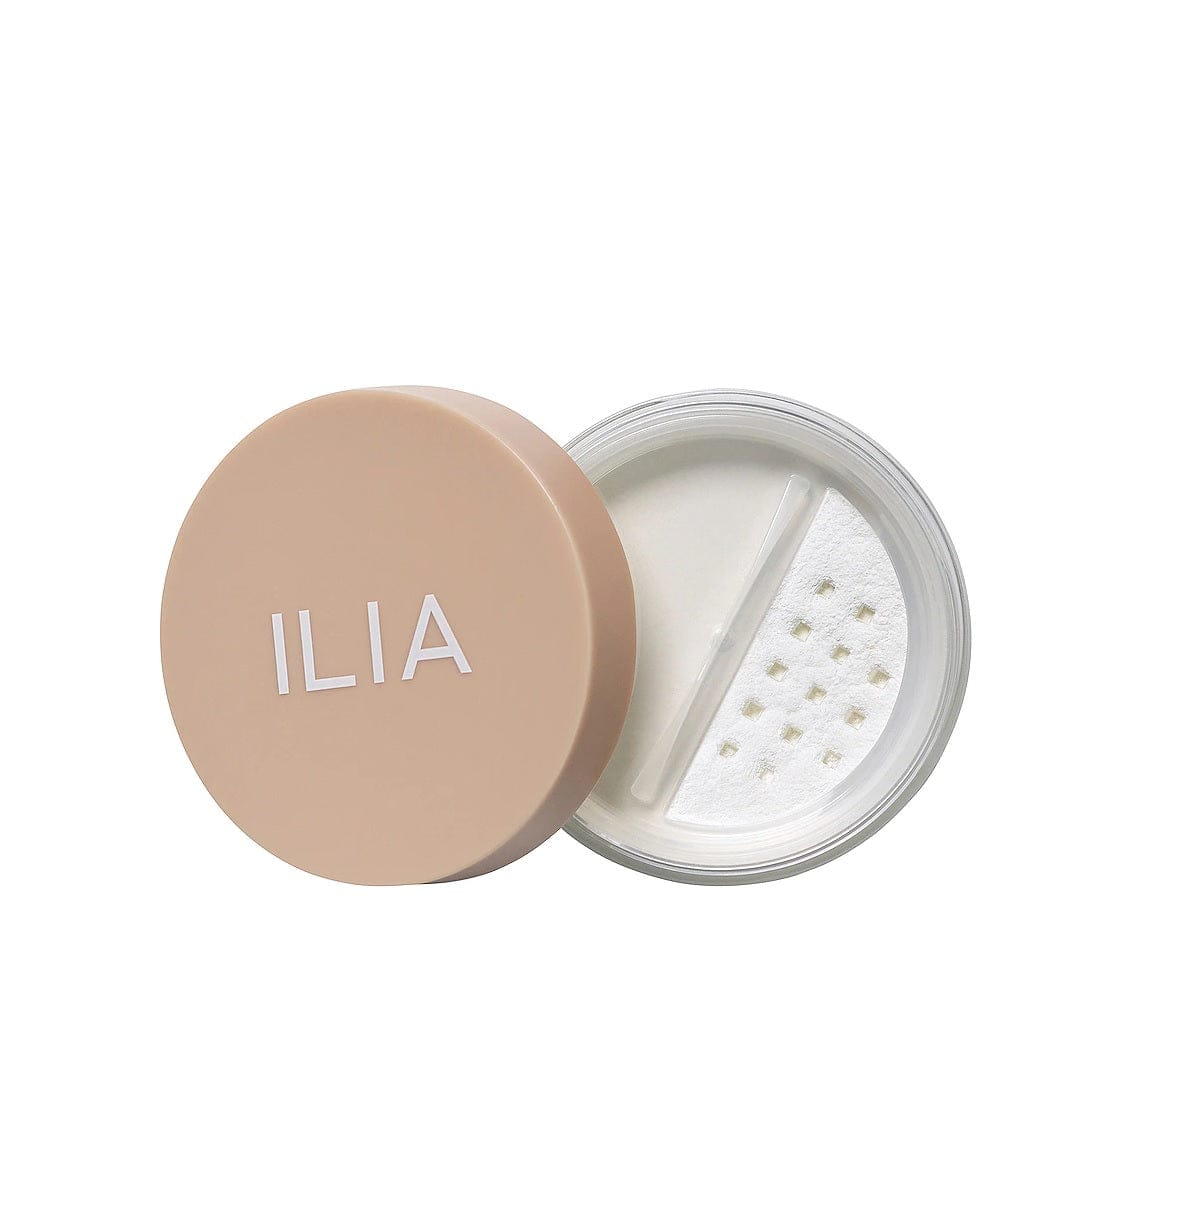 ILIA Beauty Ilia Soft Focus Finishing Powder, 9g, Fade Into You